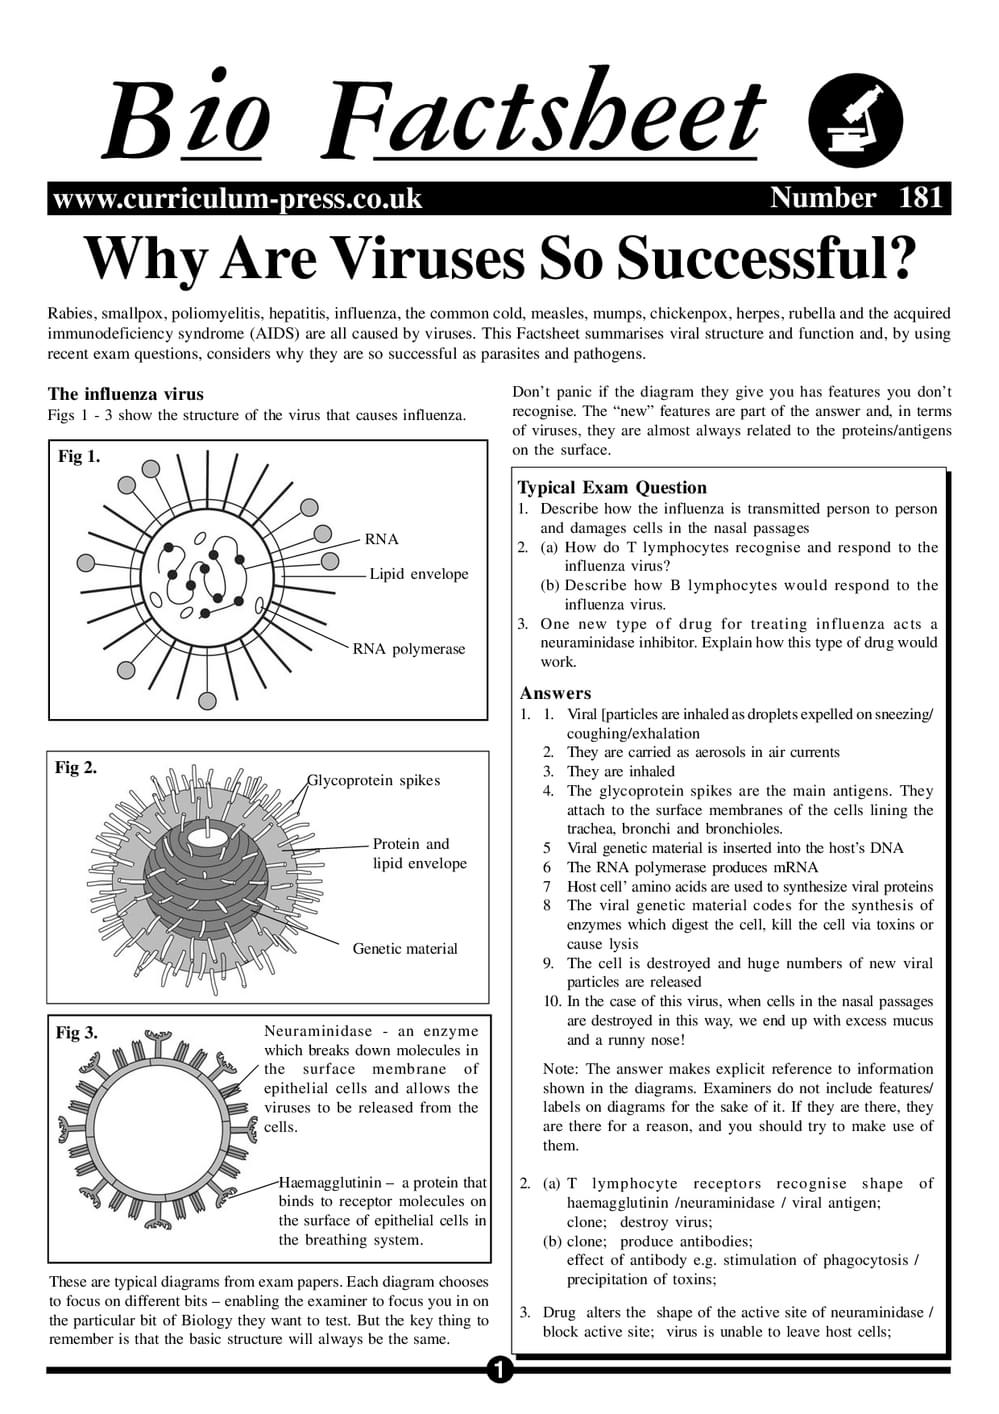 181 Viruses So Successful